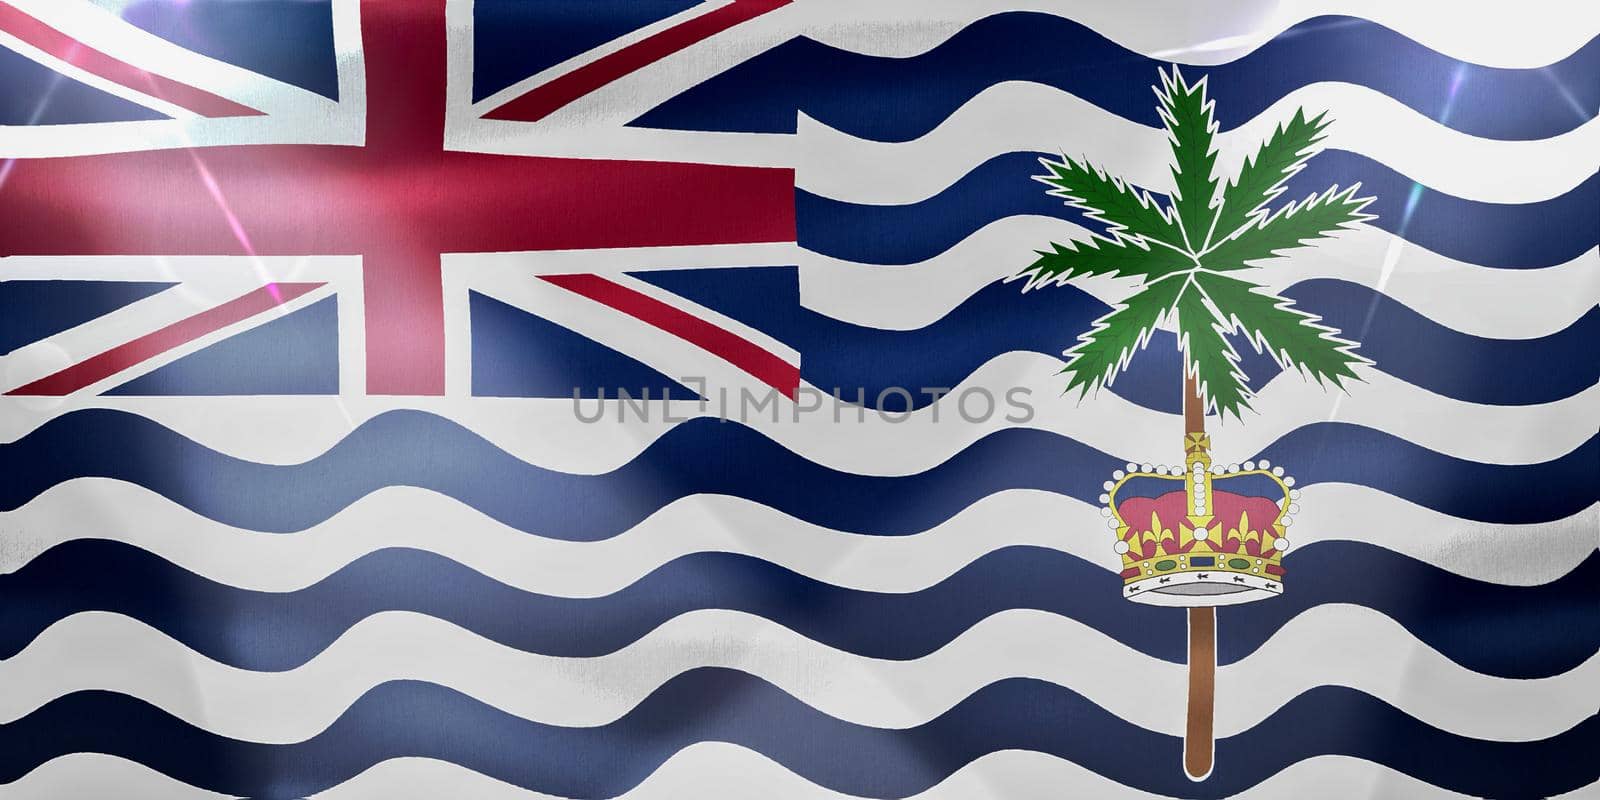 British Indian Ocean Territory flag - realistic waving fabric flag